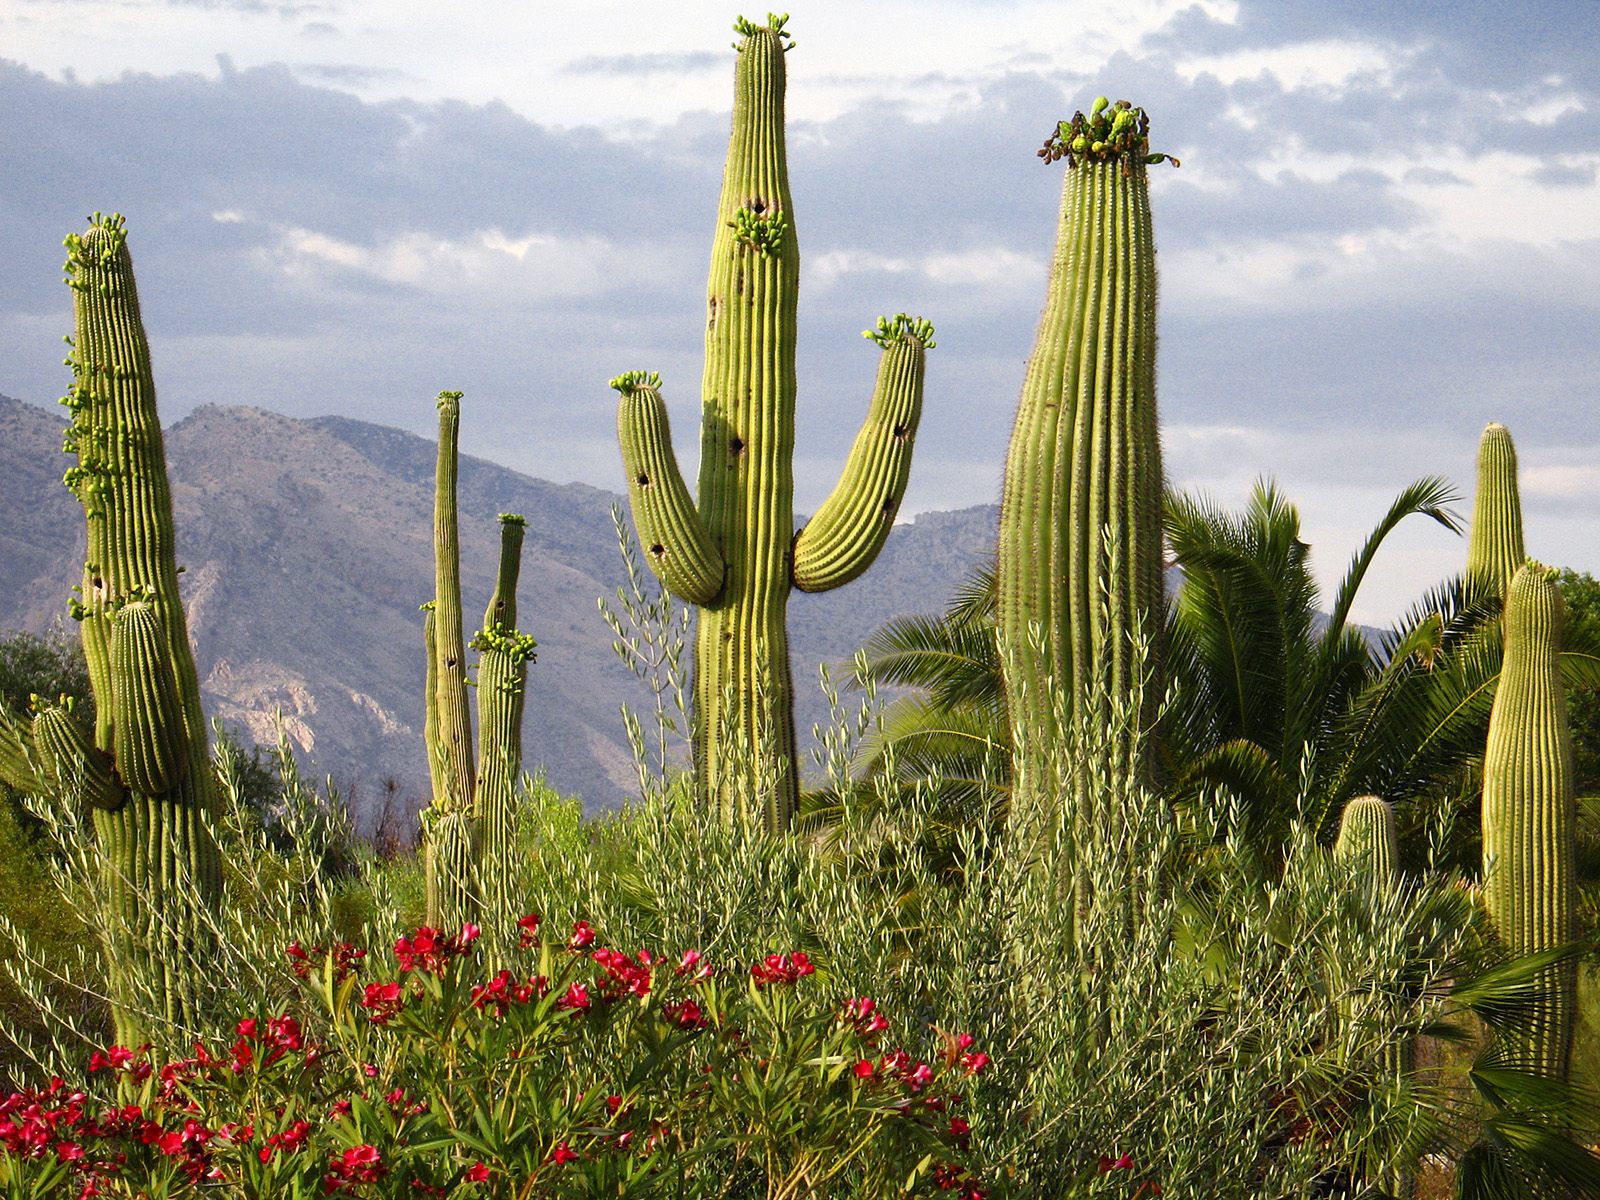 Imagini pentru imagini cactus